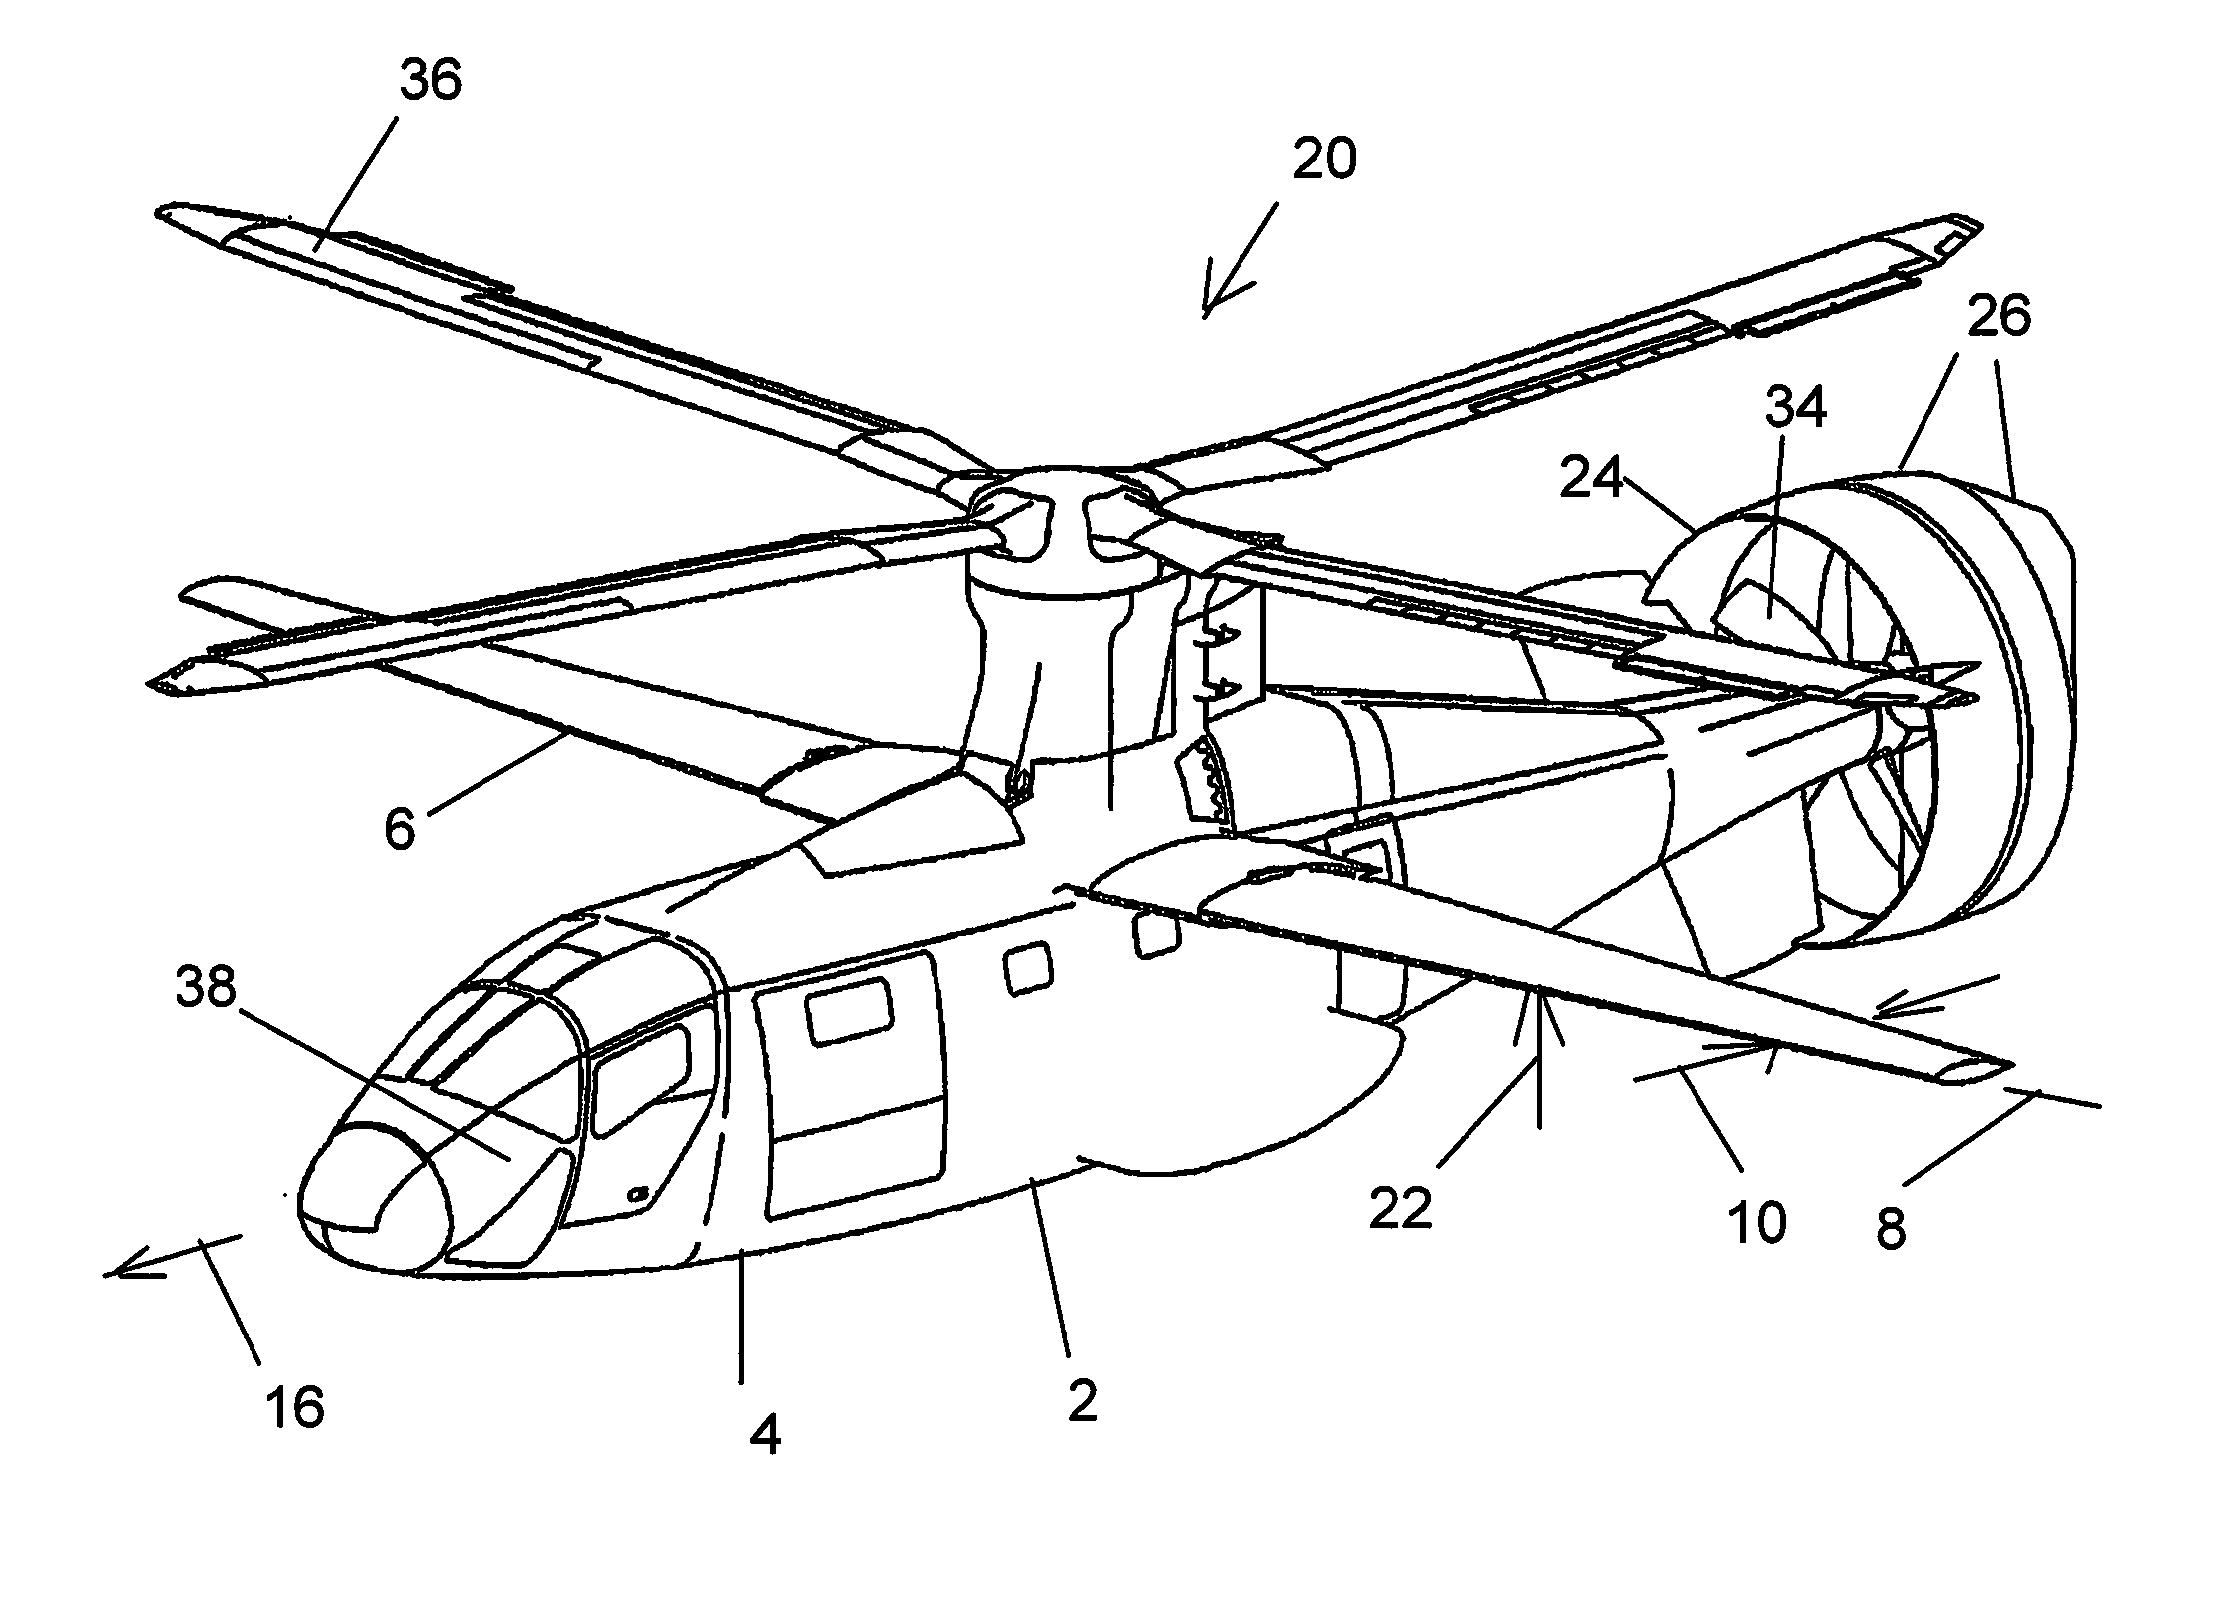 Compound Aircraft with Autorotation